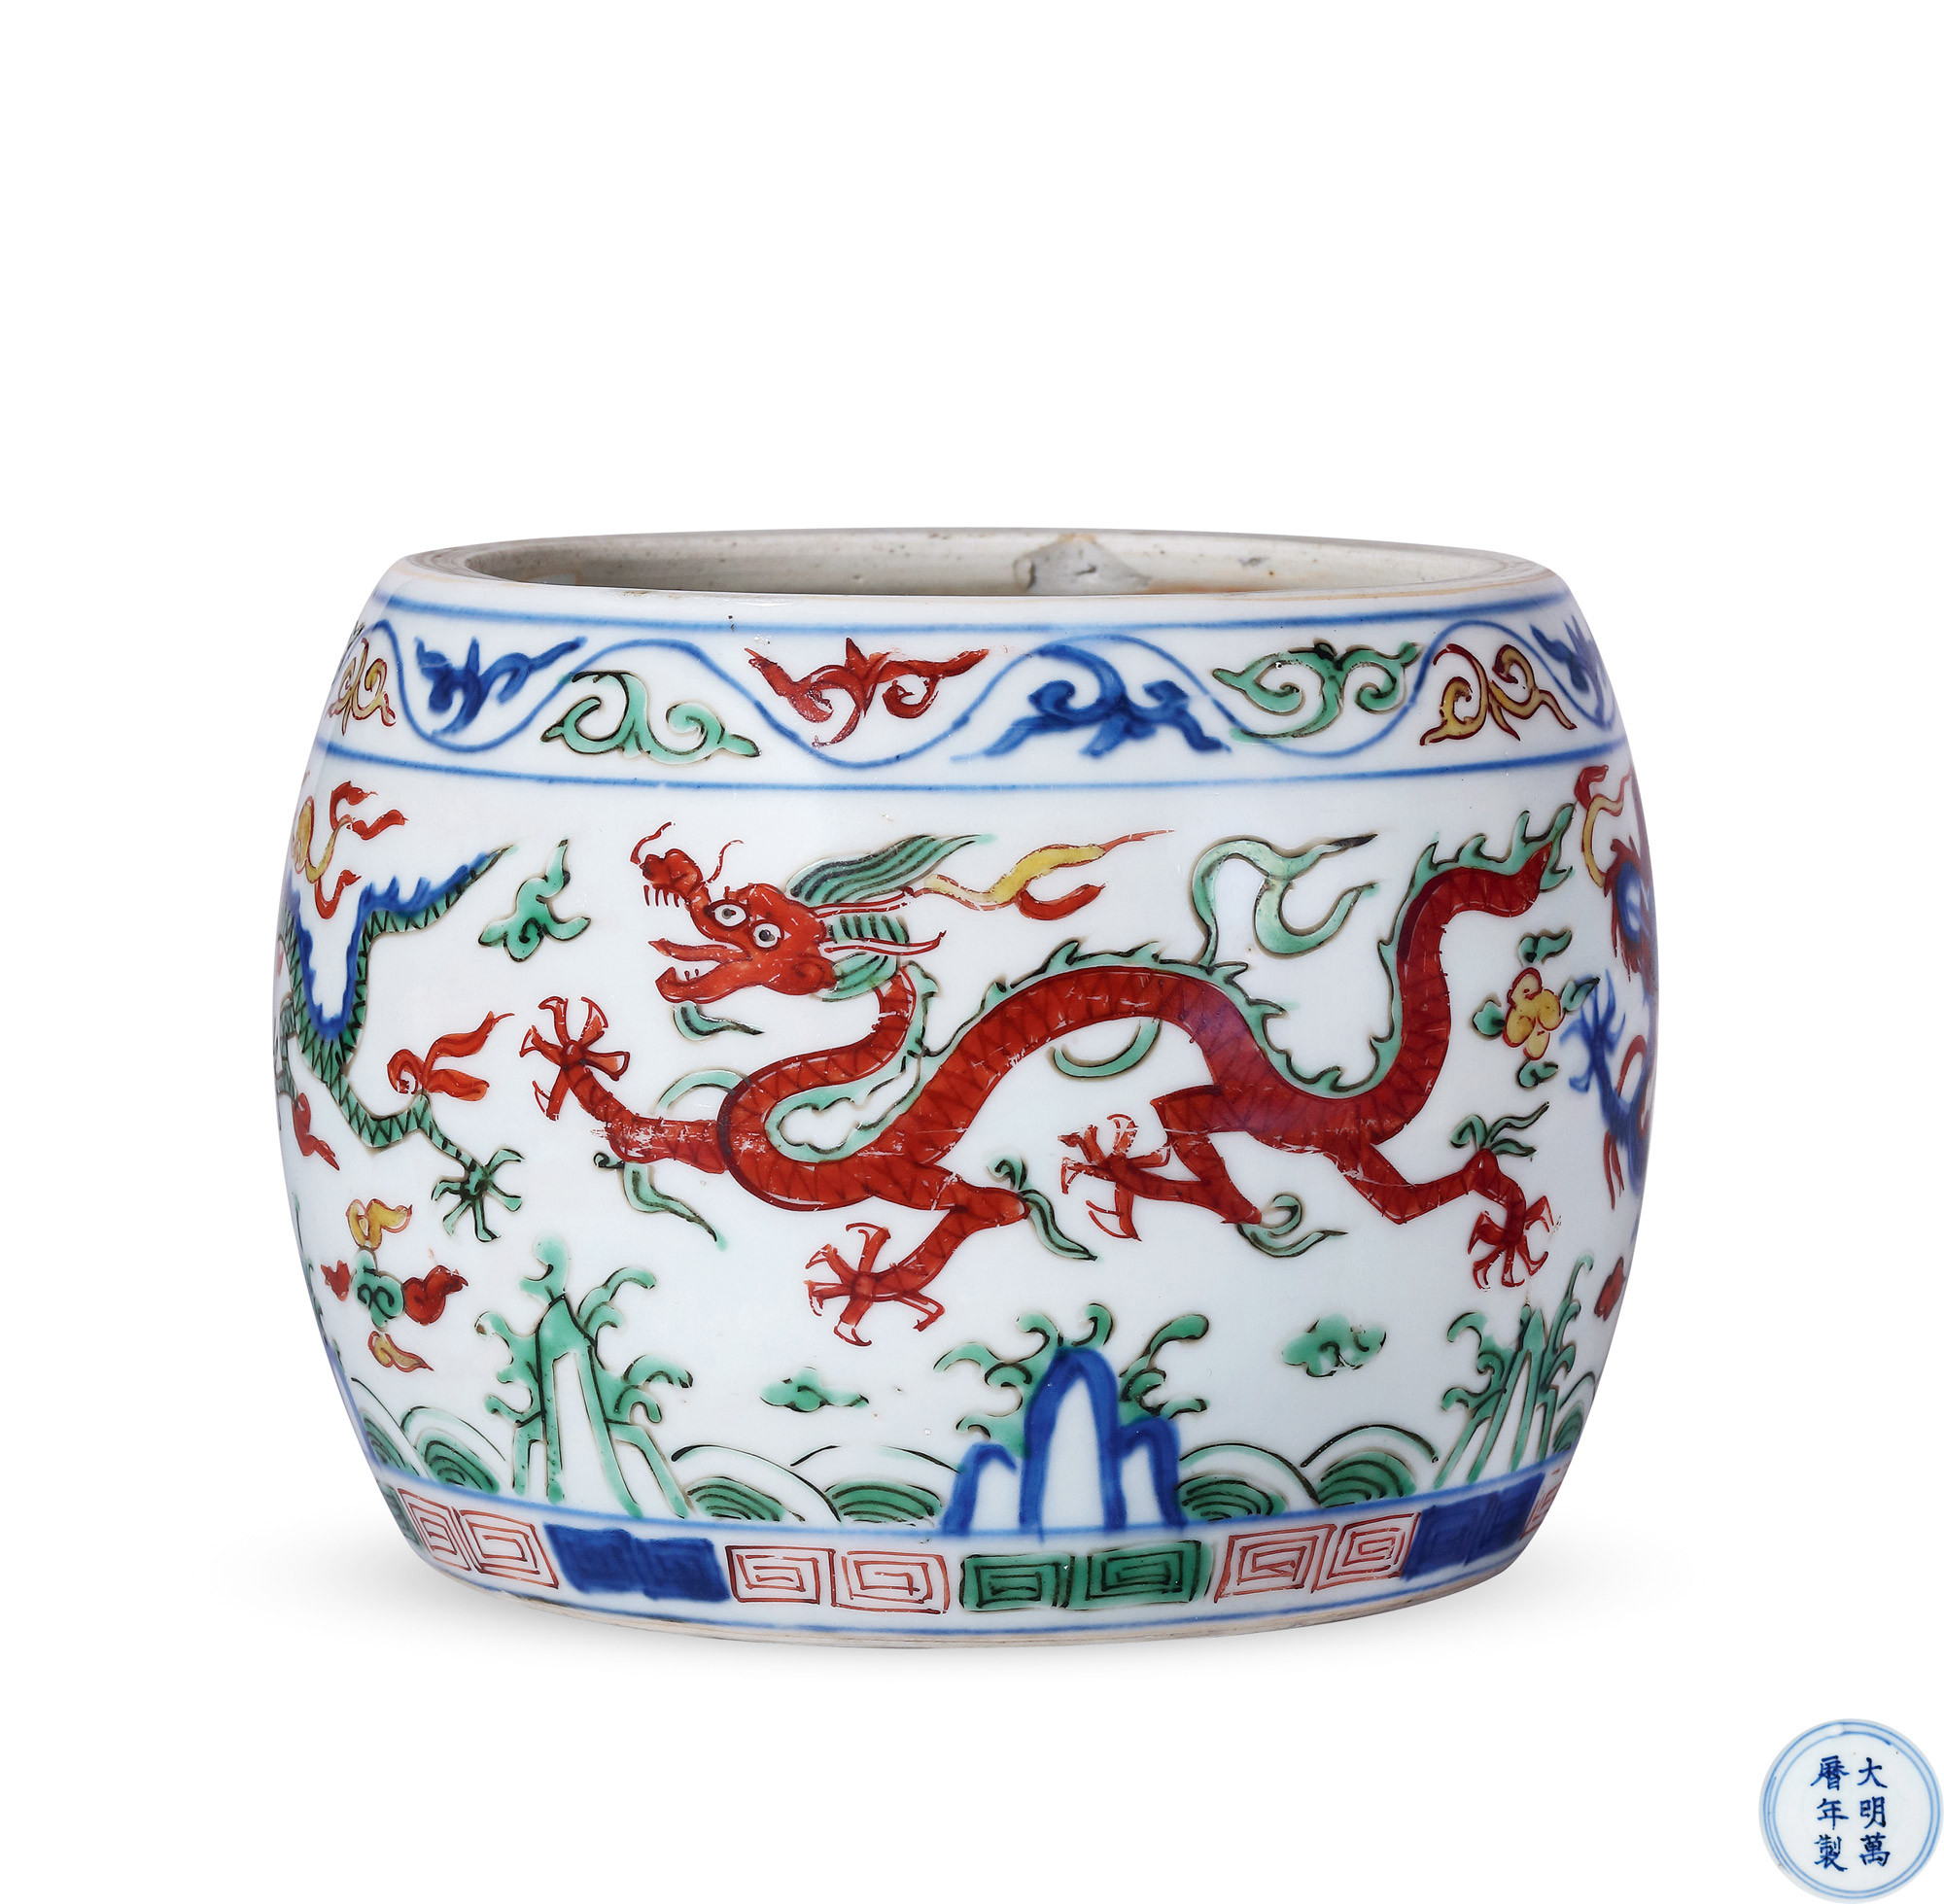 An Extremely Rare Wucai‘Dragon’Jar